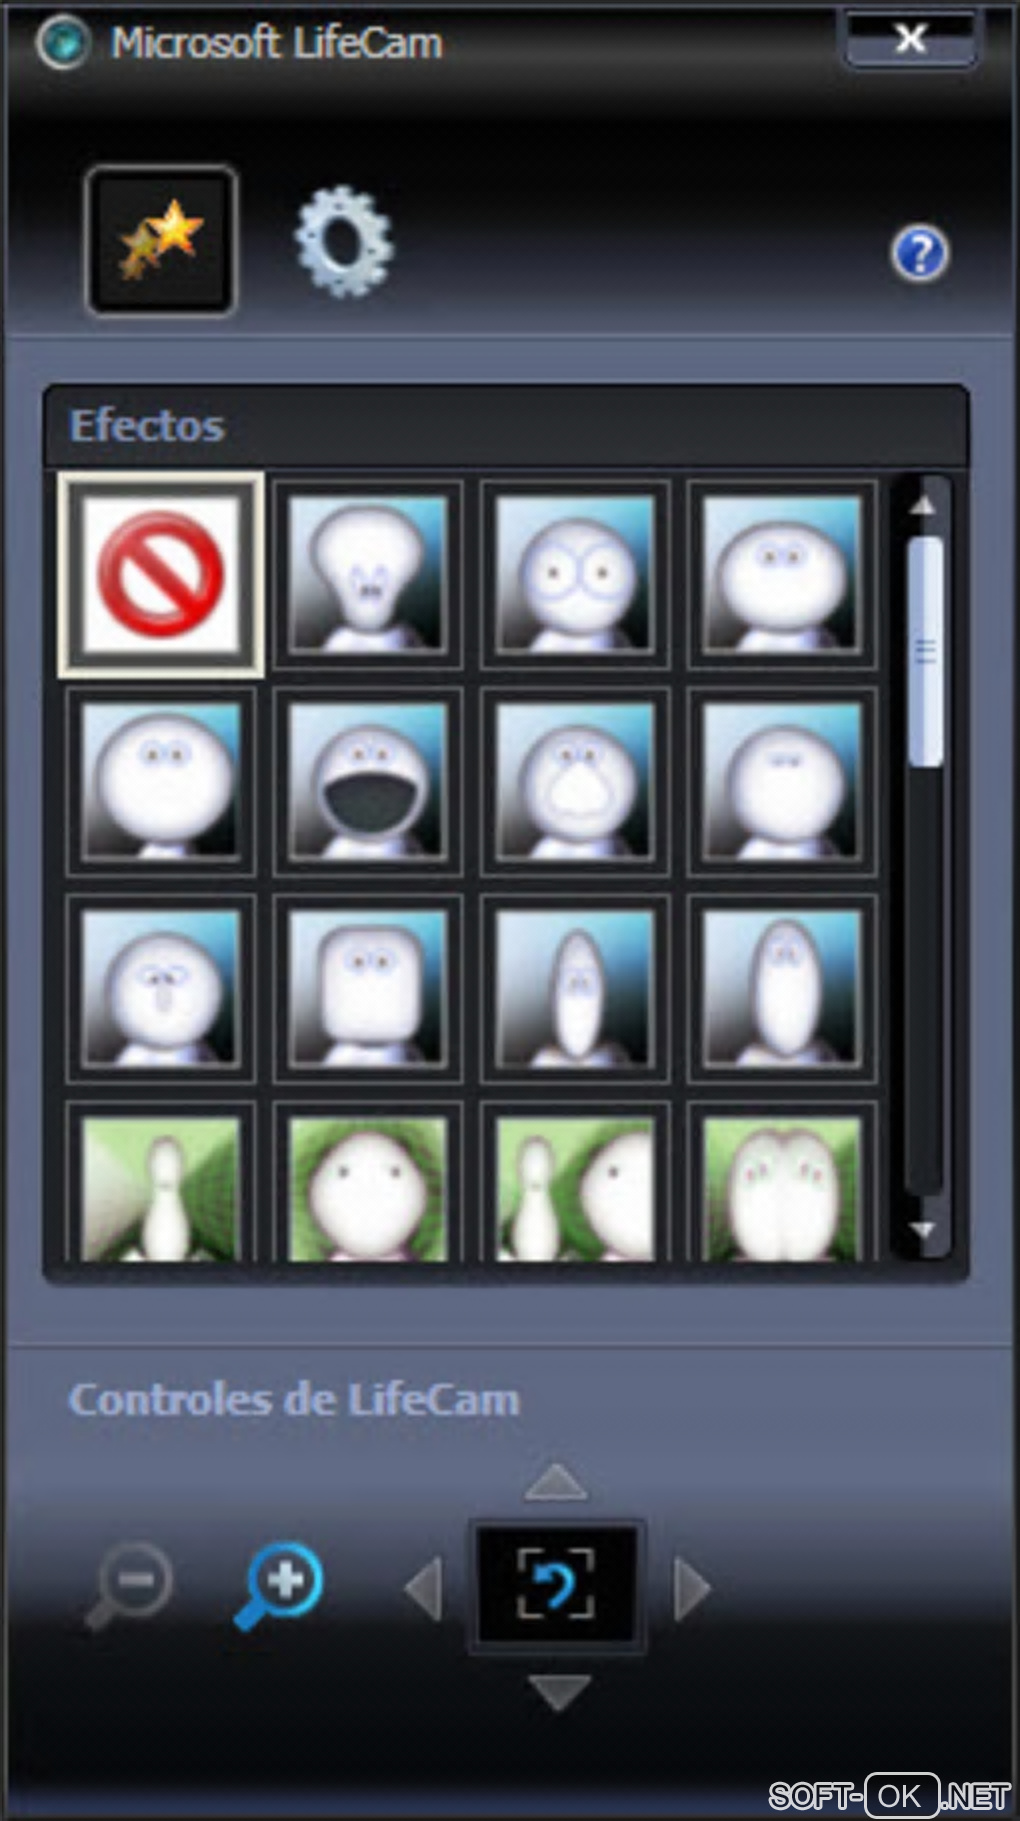 The appearance "Microsoft LifeCam"